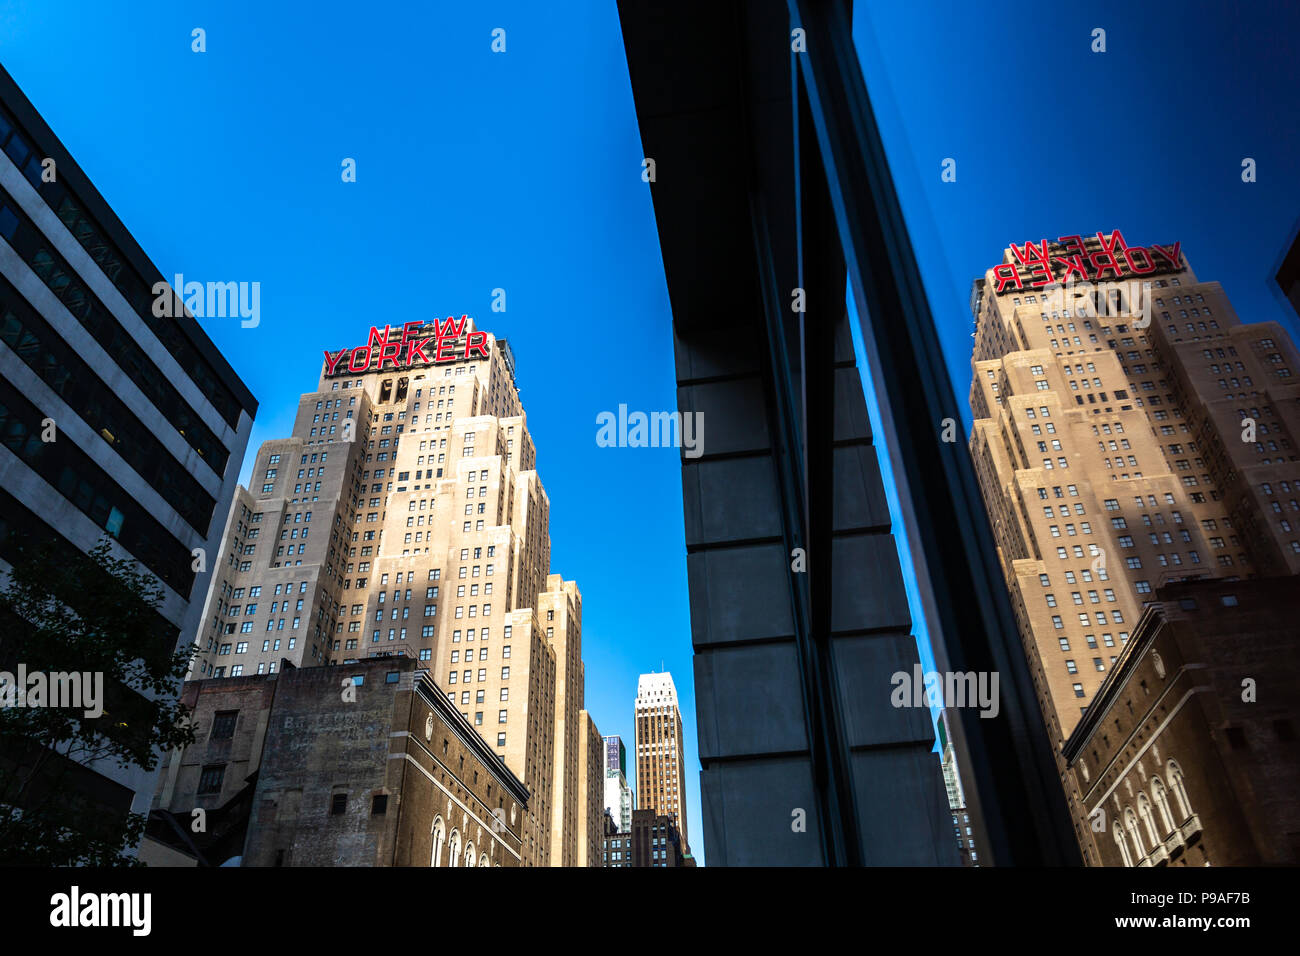 New York City / USA - JUL 13 2018: New Yorker sign of Wyndham Hotel building in midtown Manhattan Stock Photo